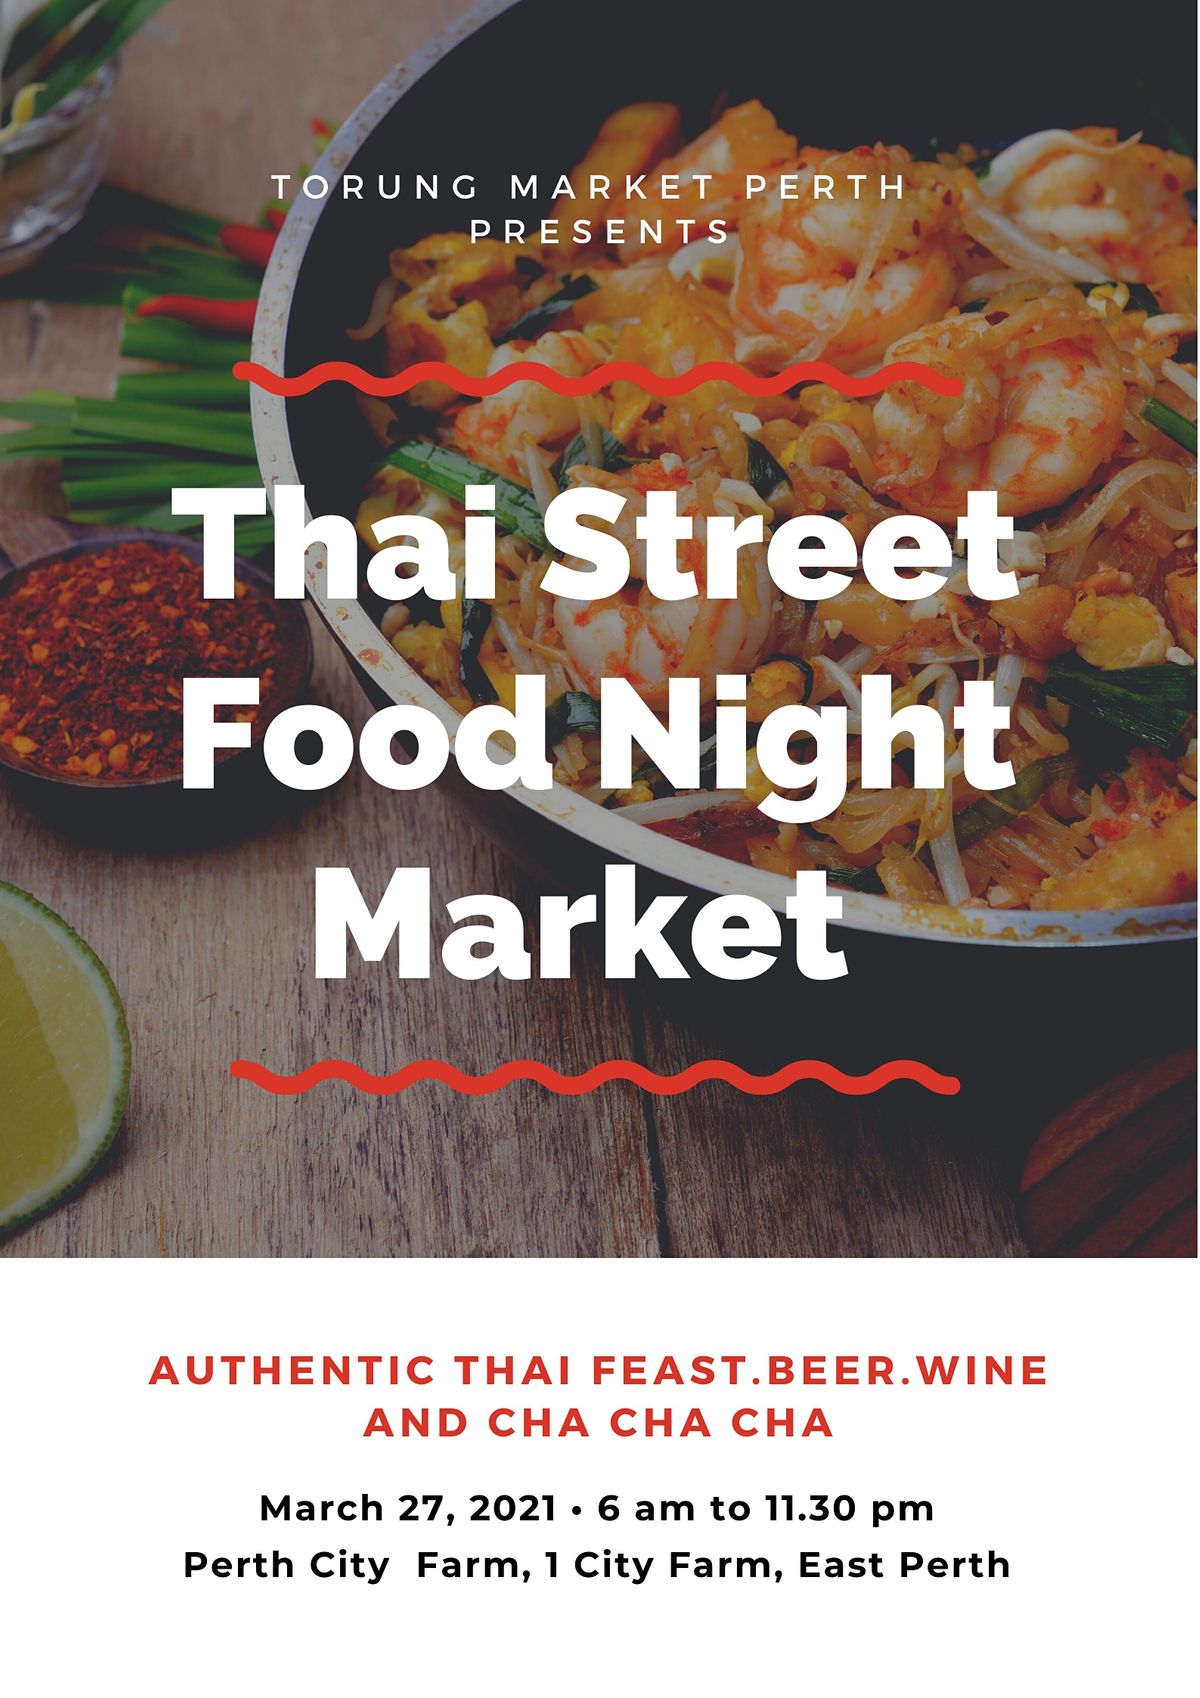 Authentic Thai Feast. Beer. Wine and Cha Cha Cha